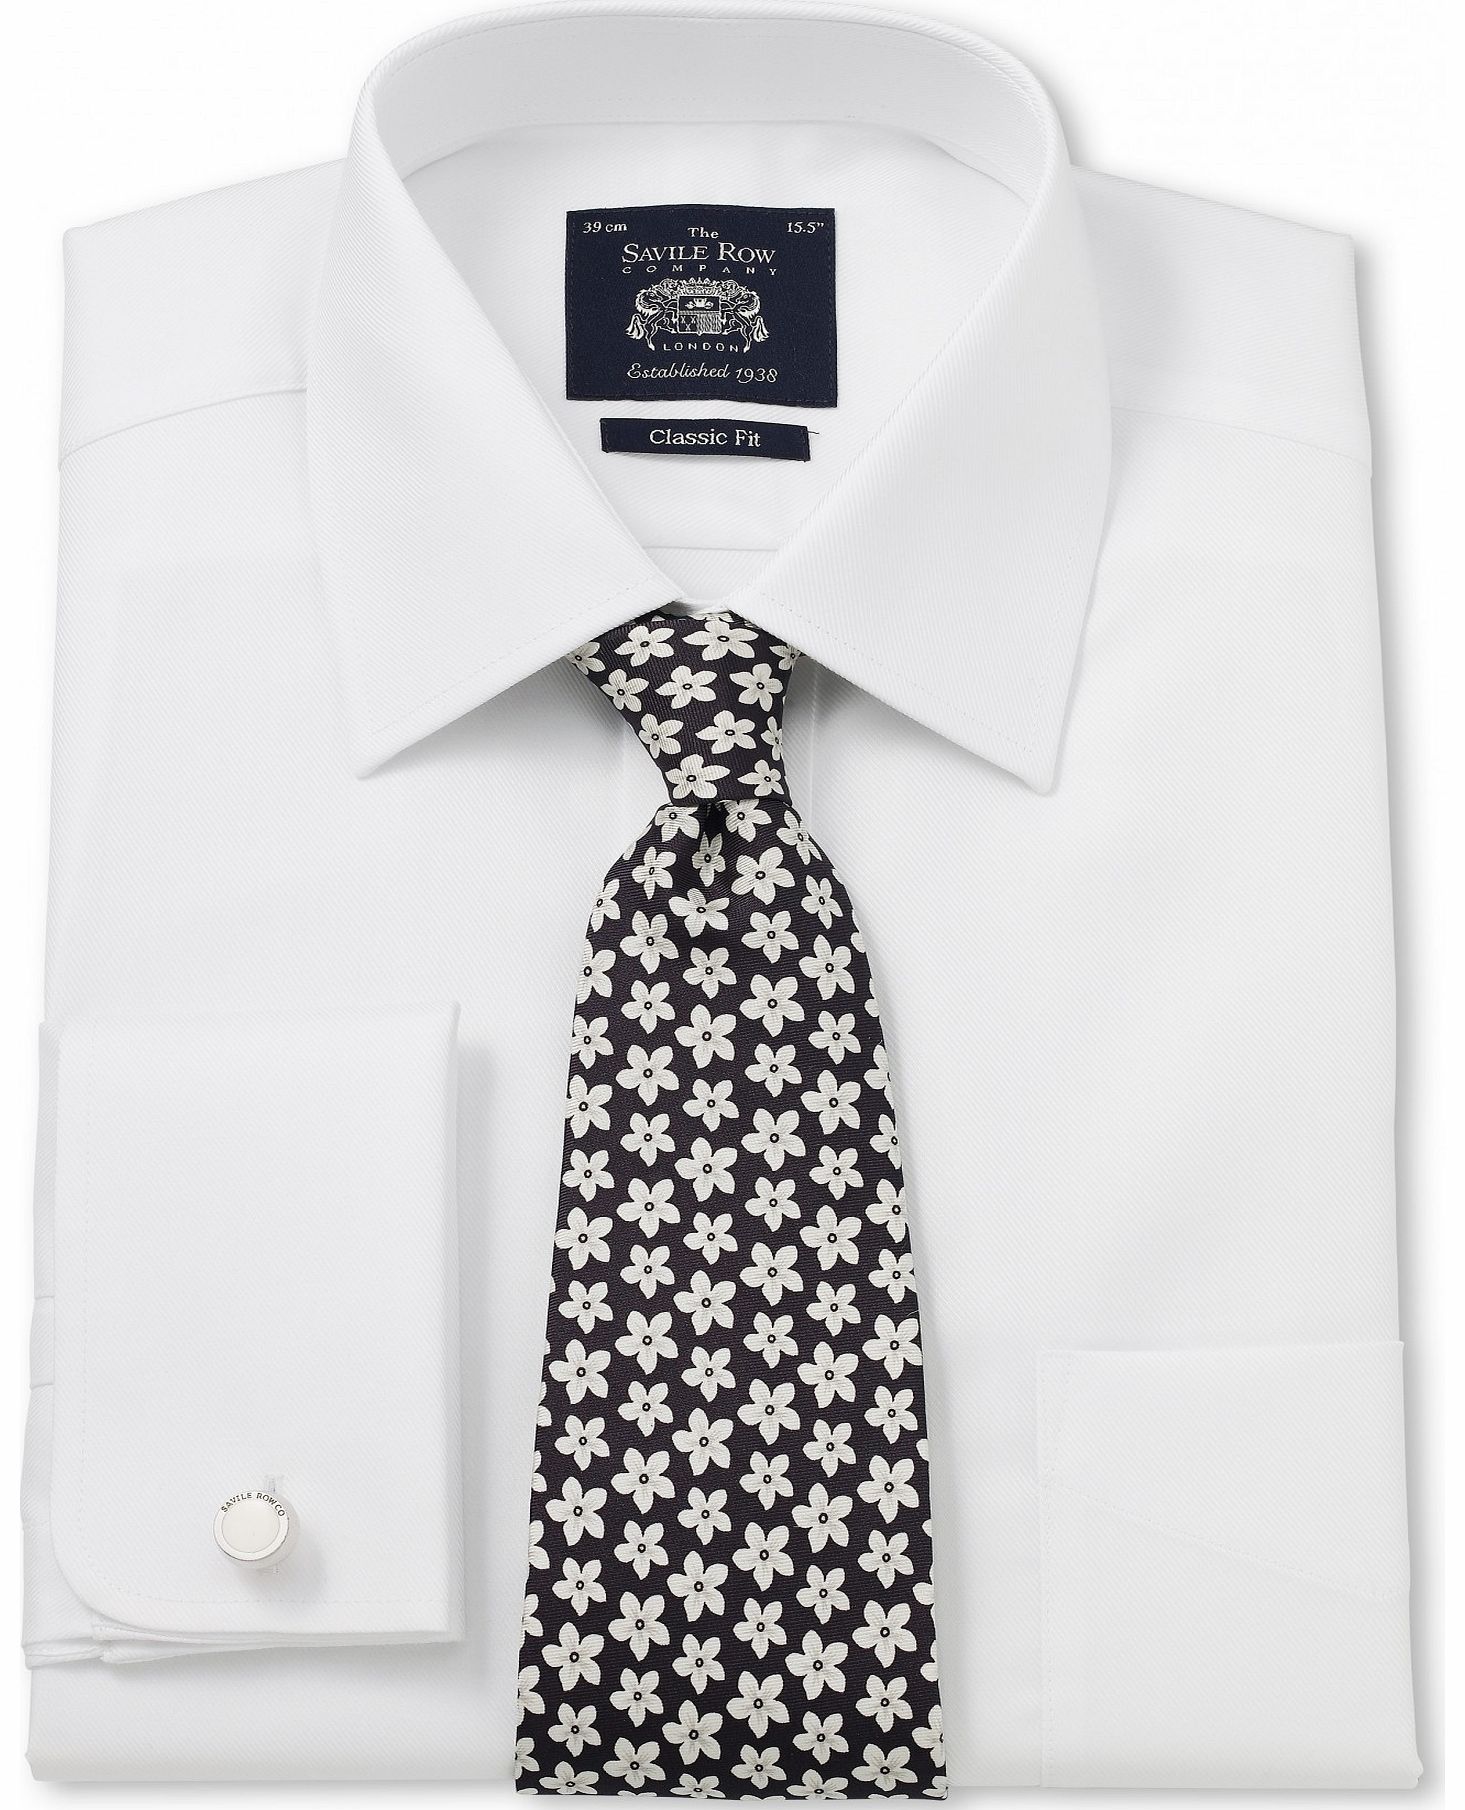 Savile Row Company White Twill Windsor Collar Classic Fit Shirt 16